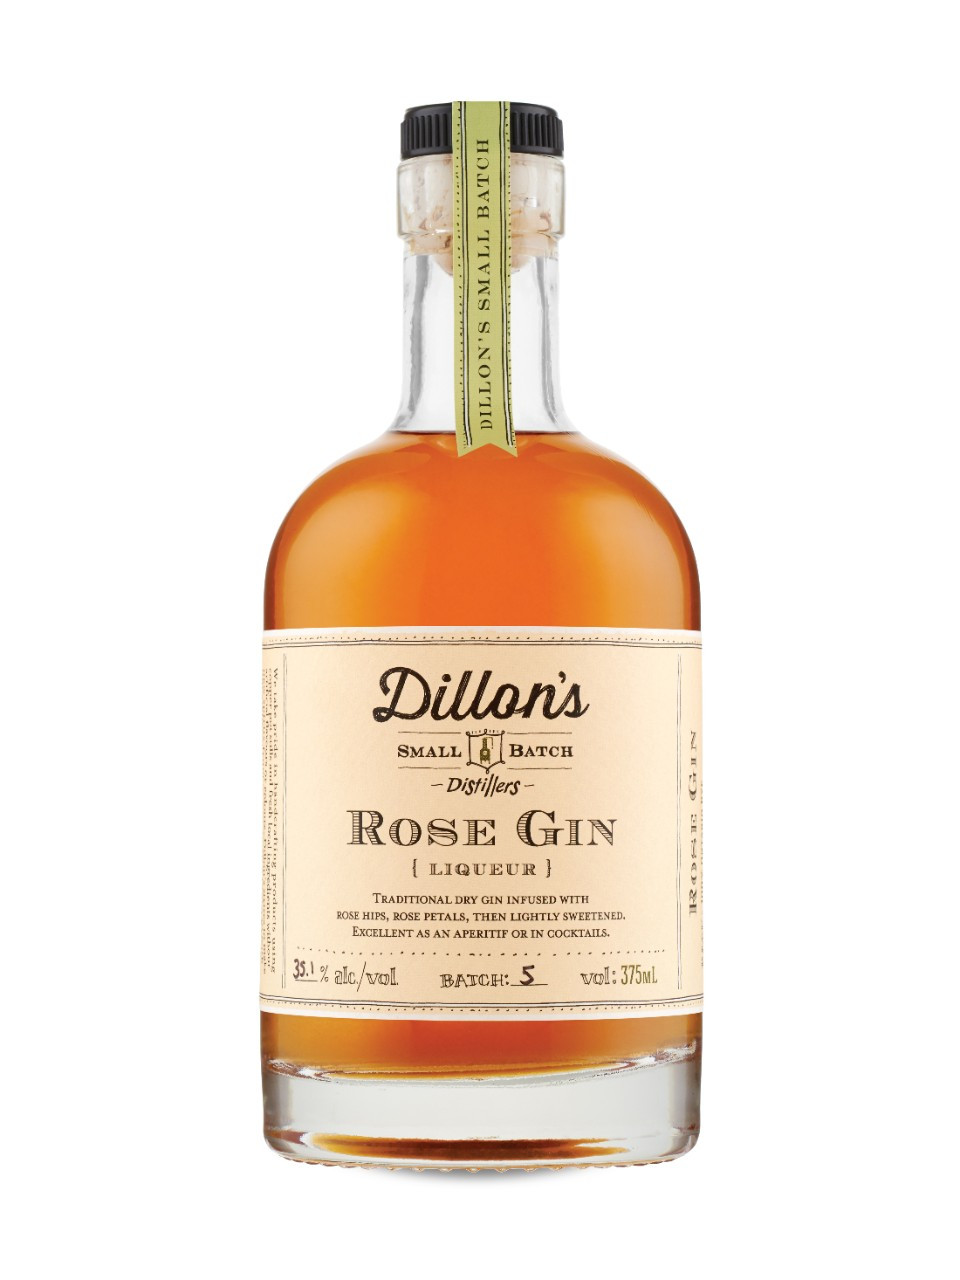 Dillon's rose gin